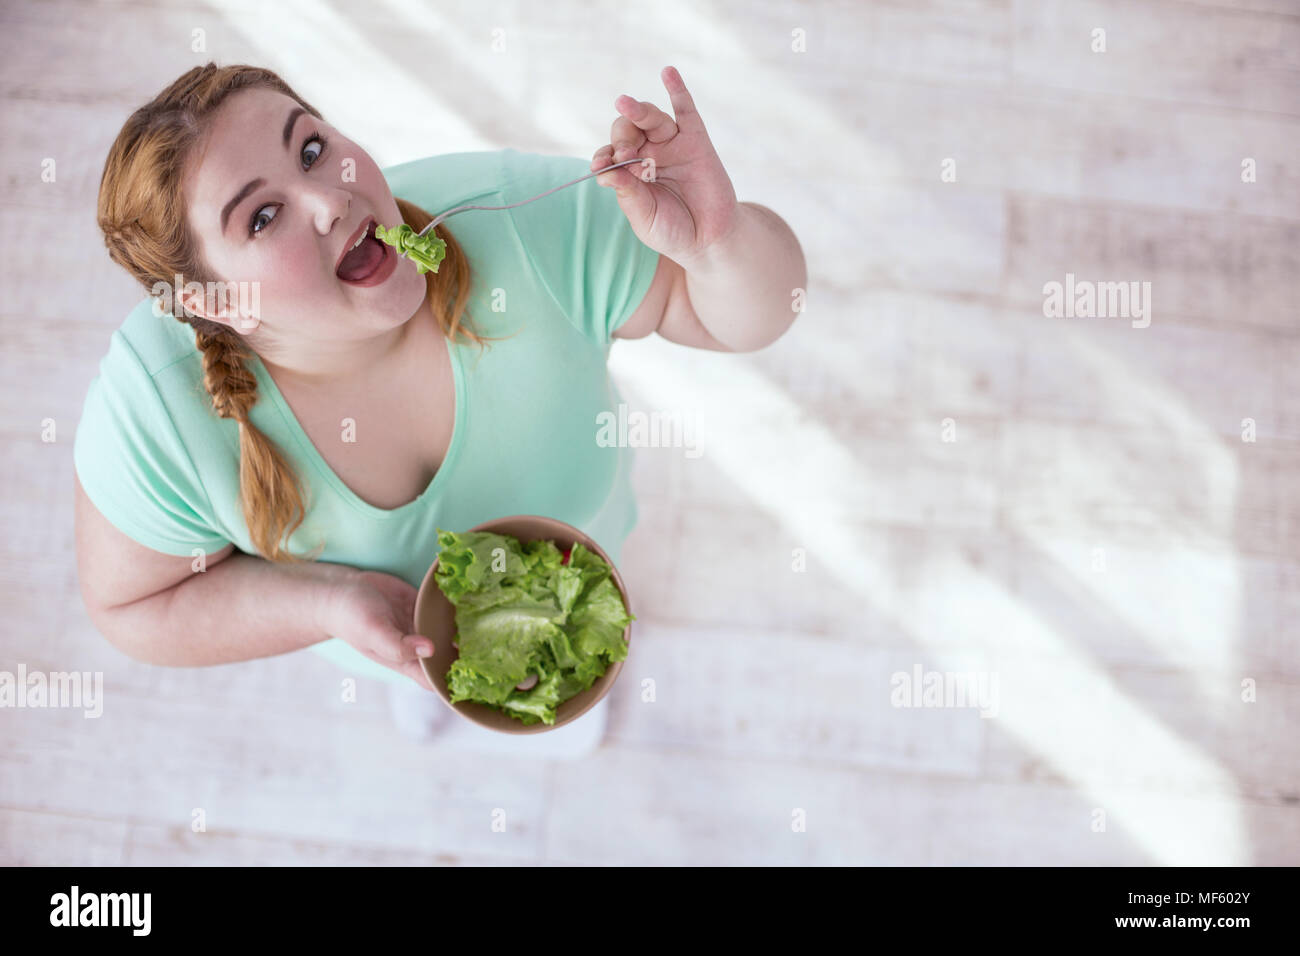 Plump young woman eating salad Stock Photo